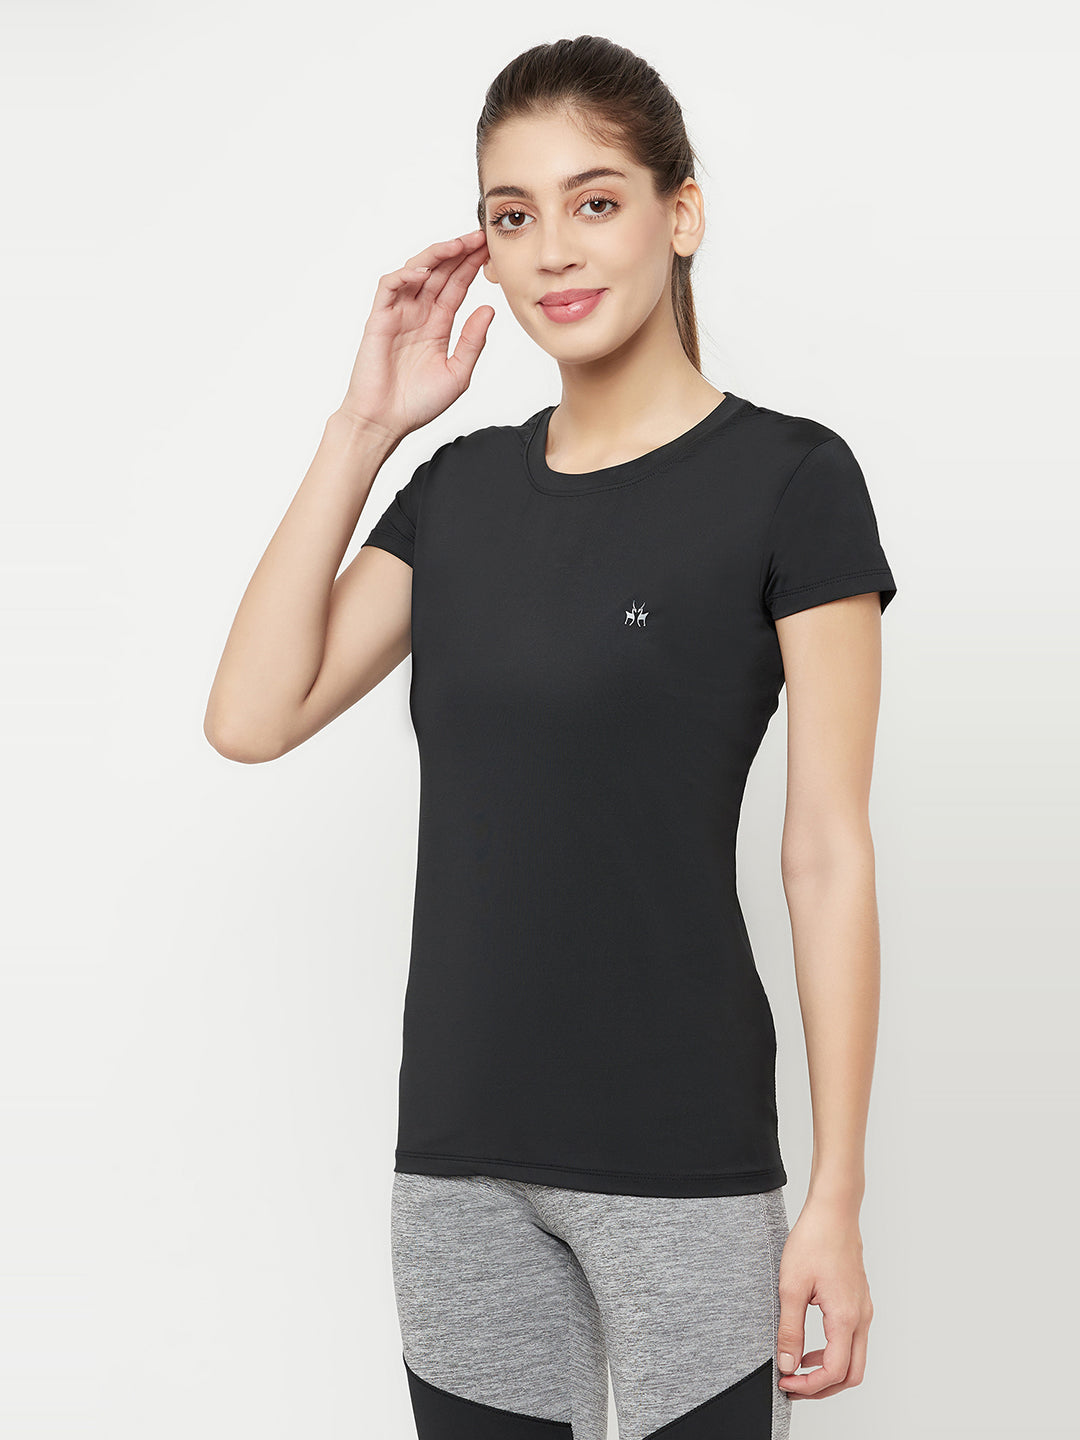 Black Round Neck Sports T-Shirt - Women T-Shirts